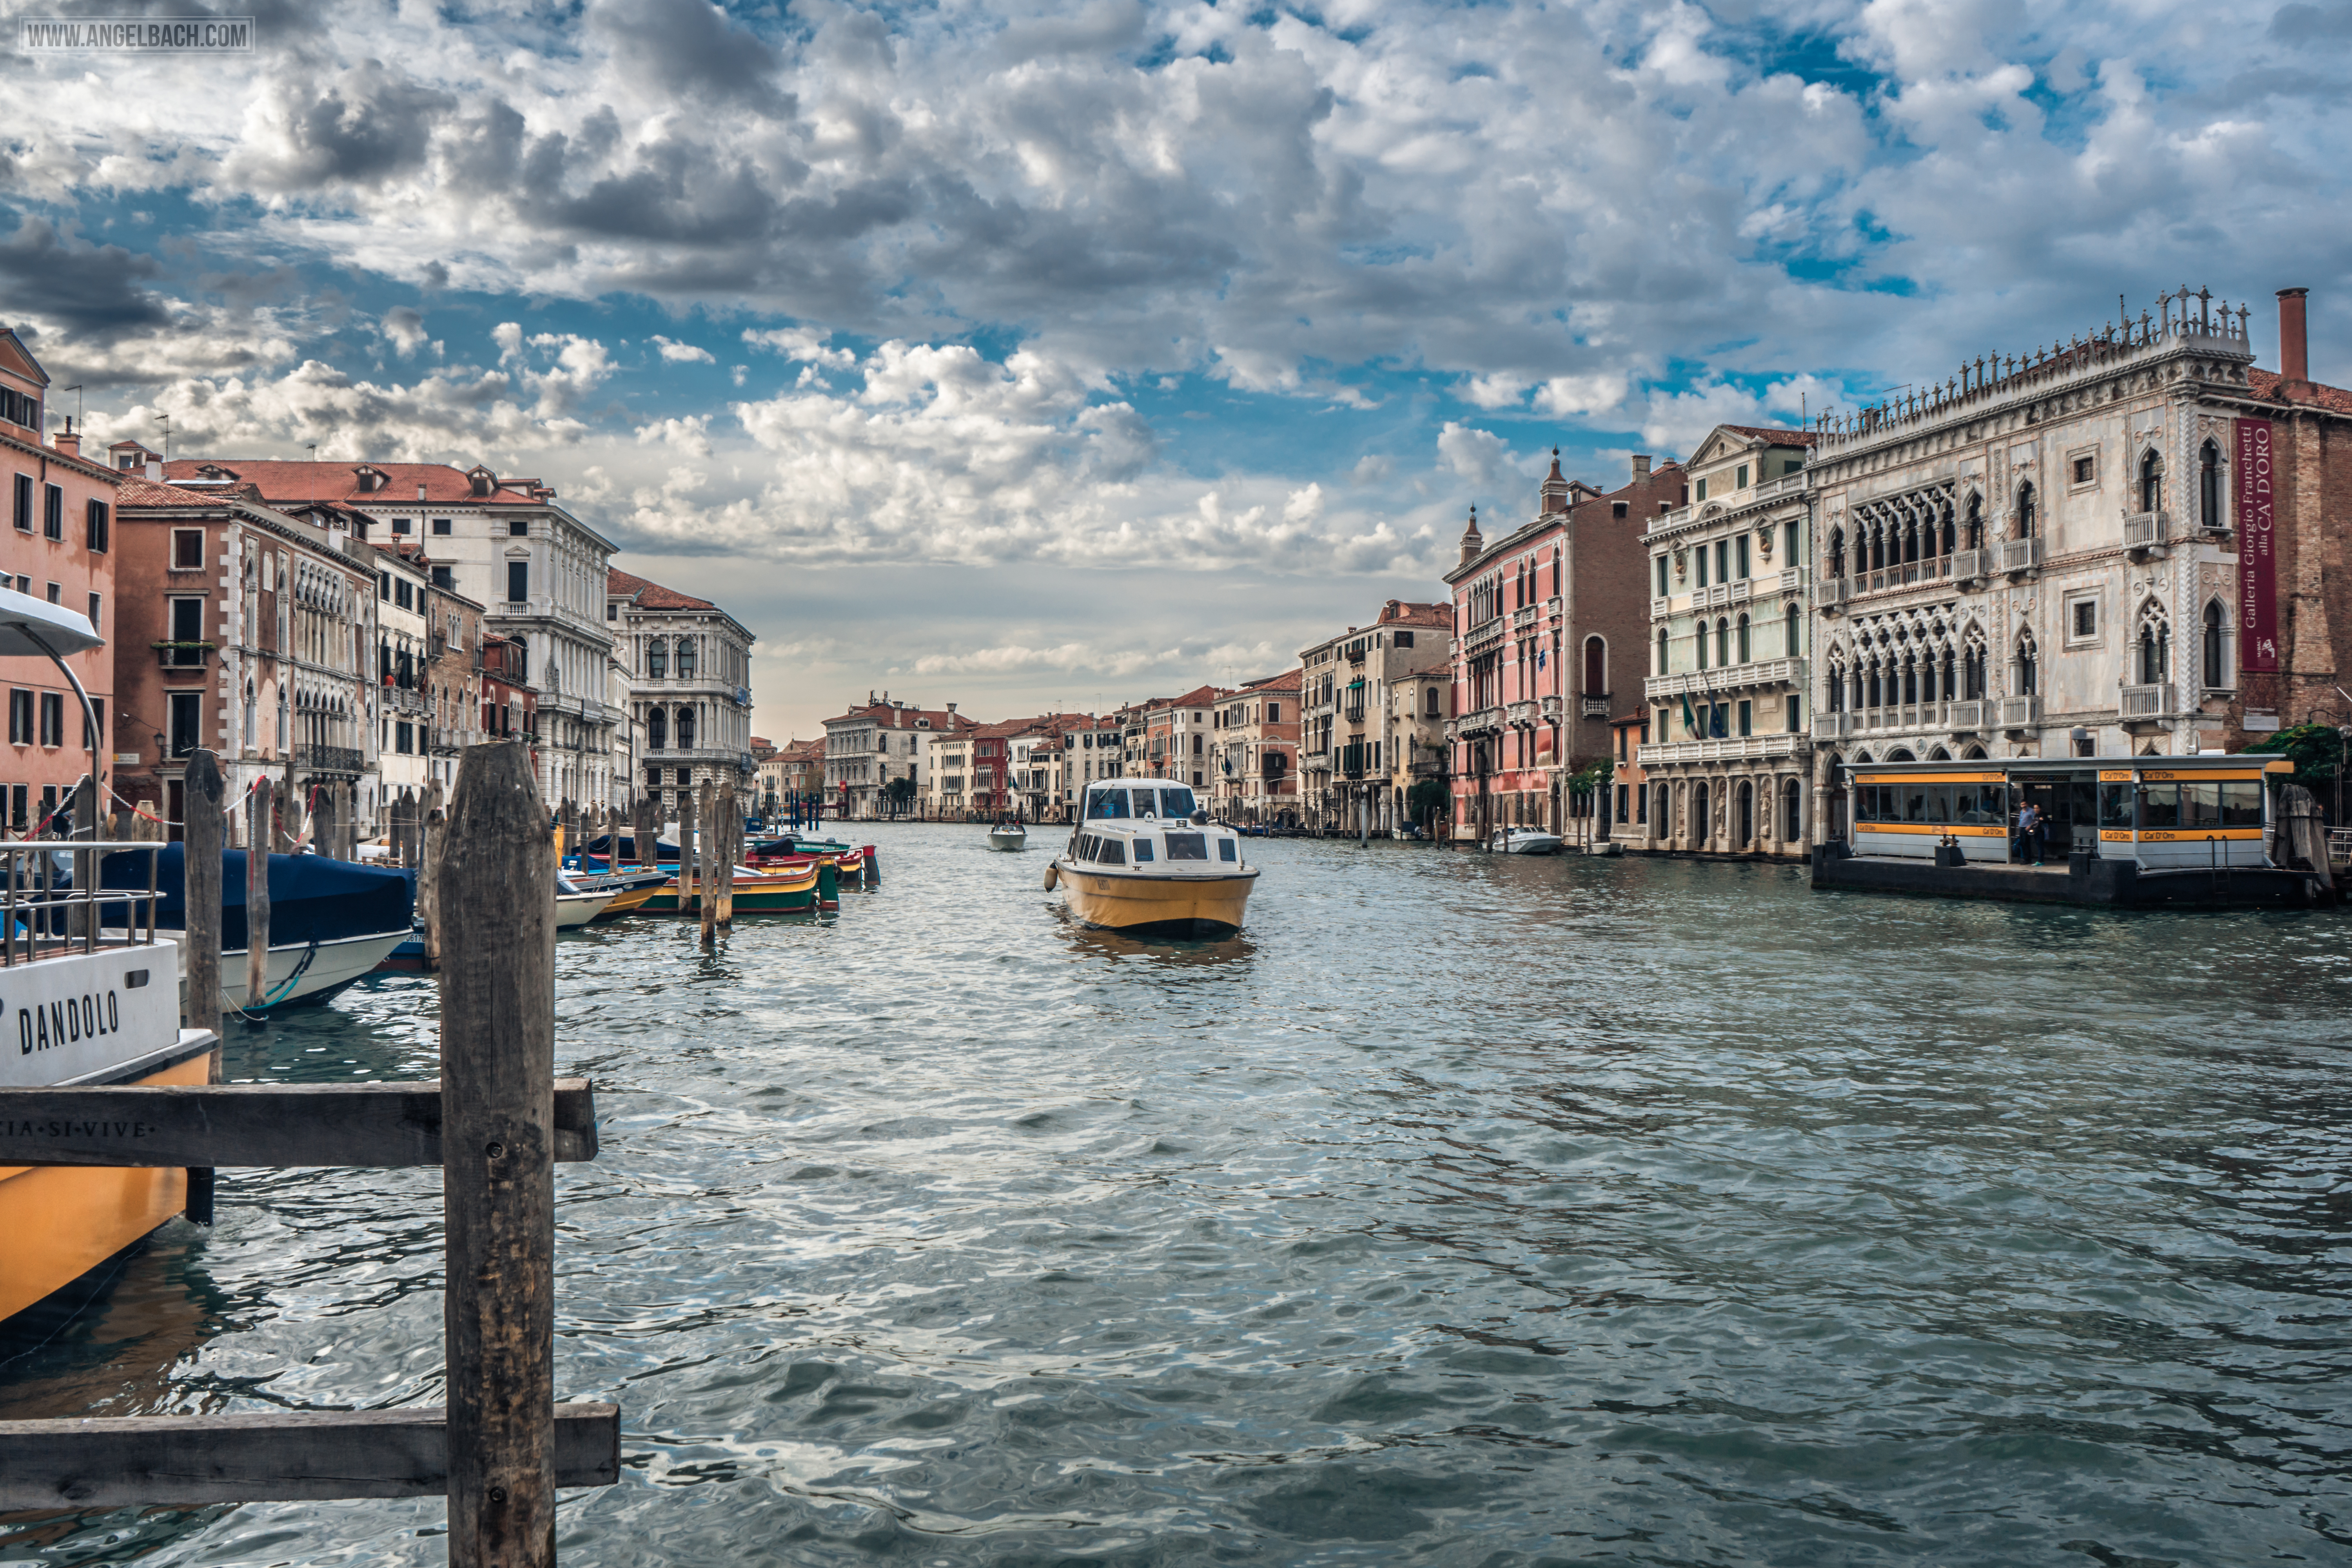 Venice Architecture, Grand Canal, Sailing, boats, gandola ride, Adriatic Sea, Venice Lagoon, Renaissance, Gothic, Vintage Venice, Venezia, Italy, Photography